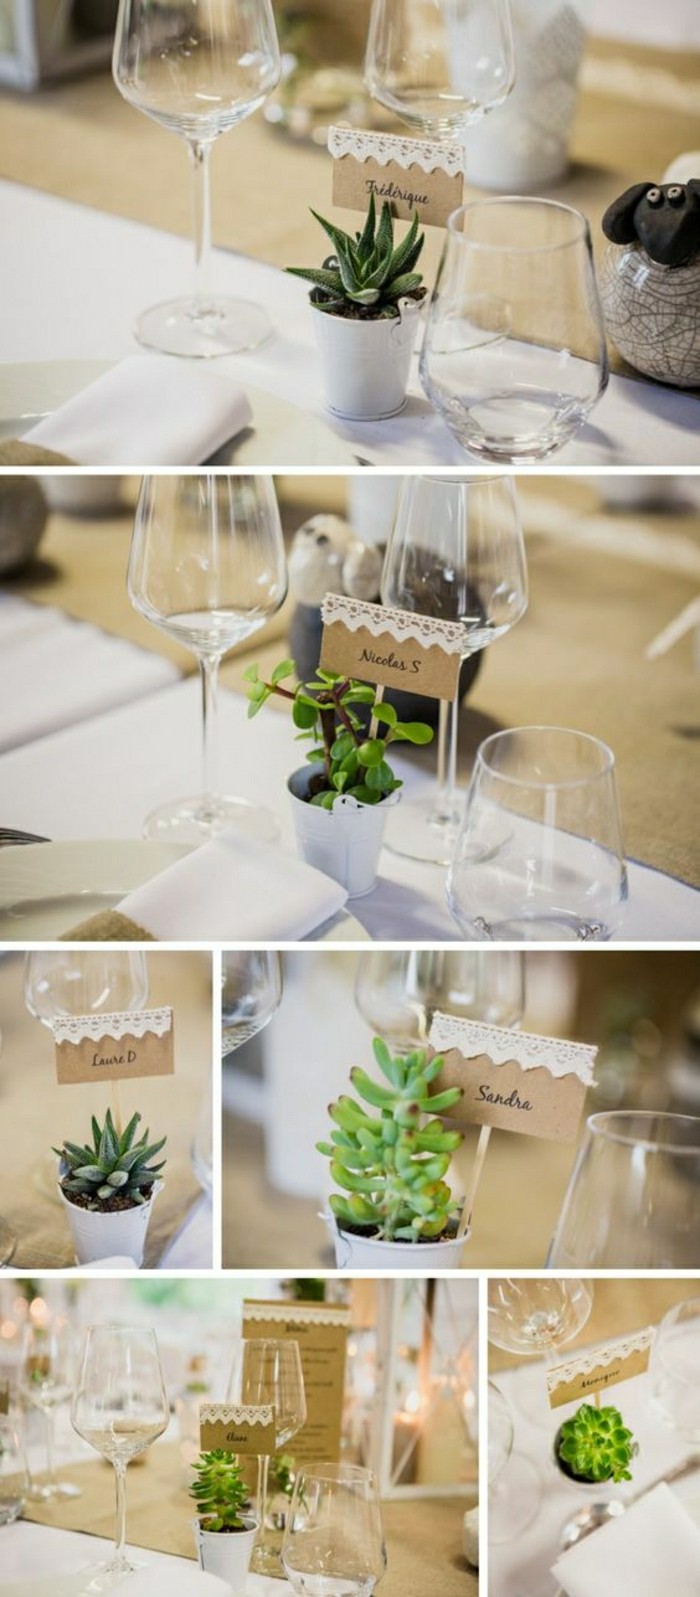 originale-idee-deco-table-mariage-avec-plante-verte-décoration-de-table-mariage-avec-plantes-vertes-en-cache-pot